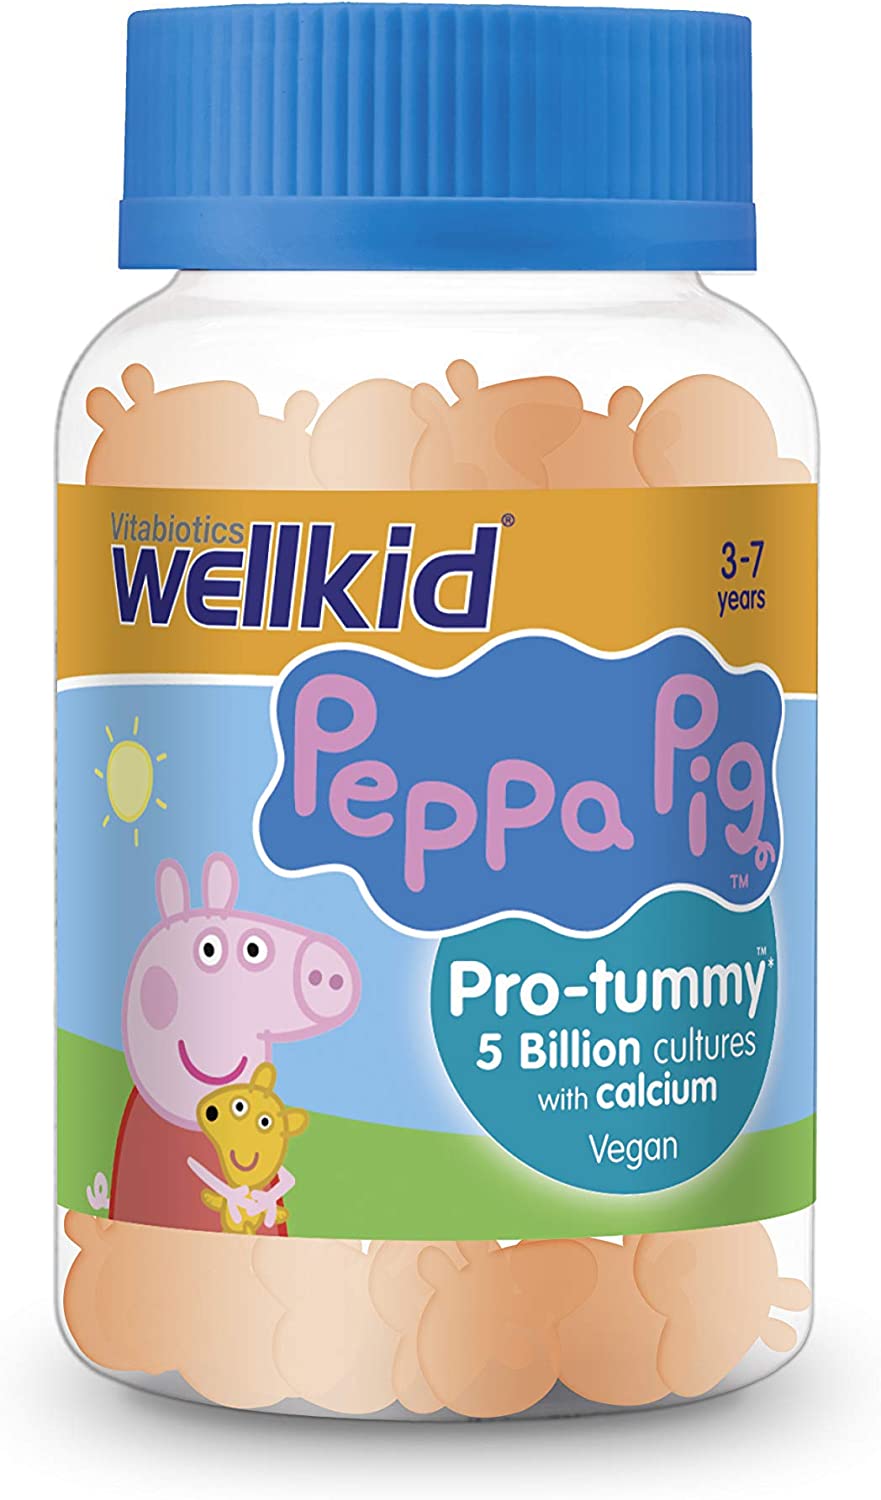 Wellkid Peppa Pig Pro Tummy